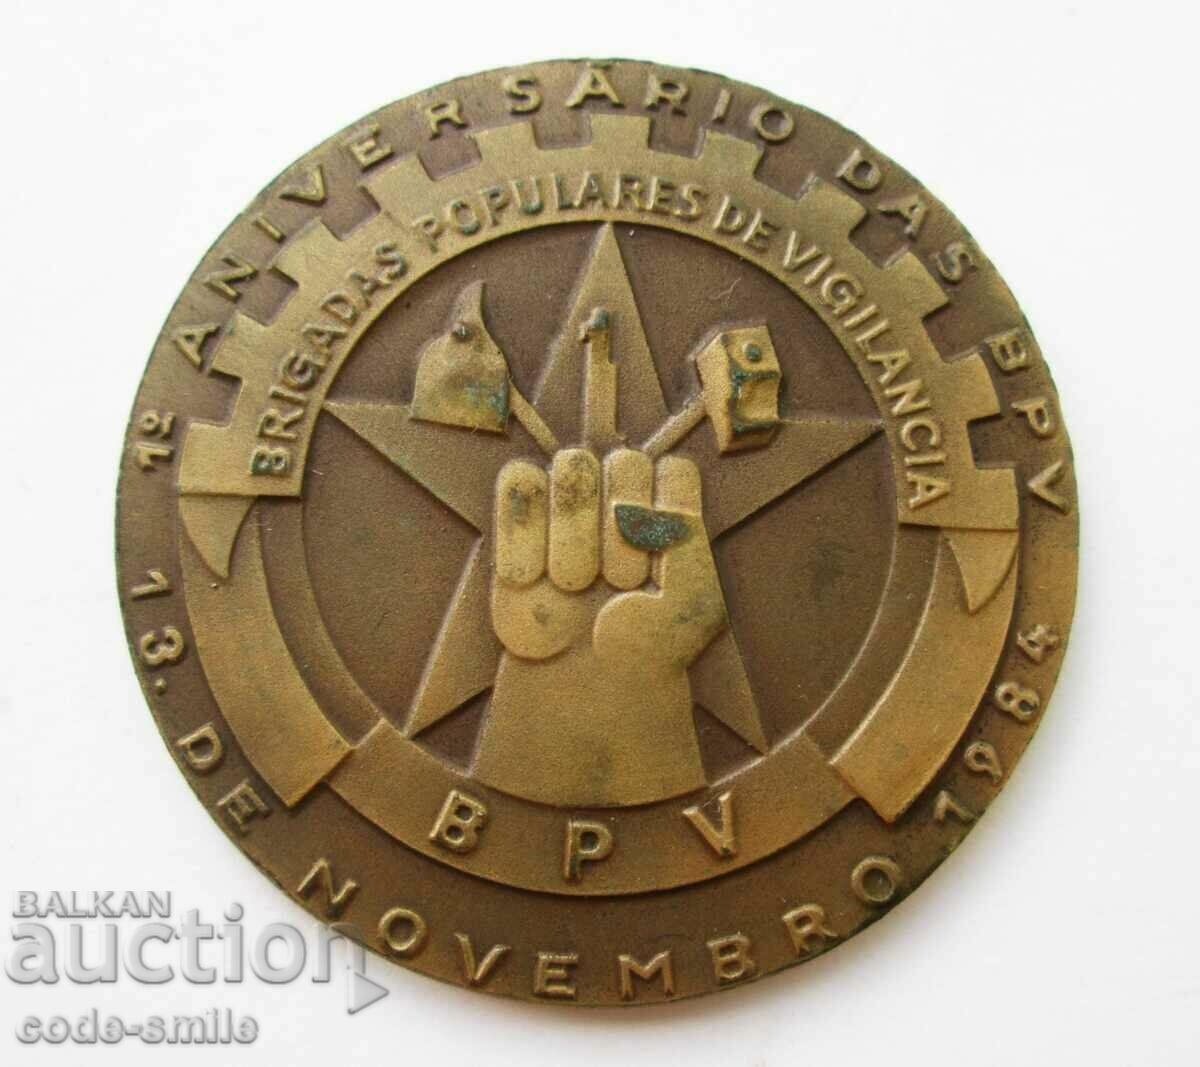 Veche placă de medalie rară a miliției paramilitare din Angola